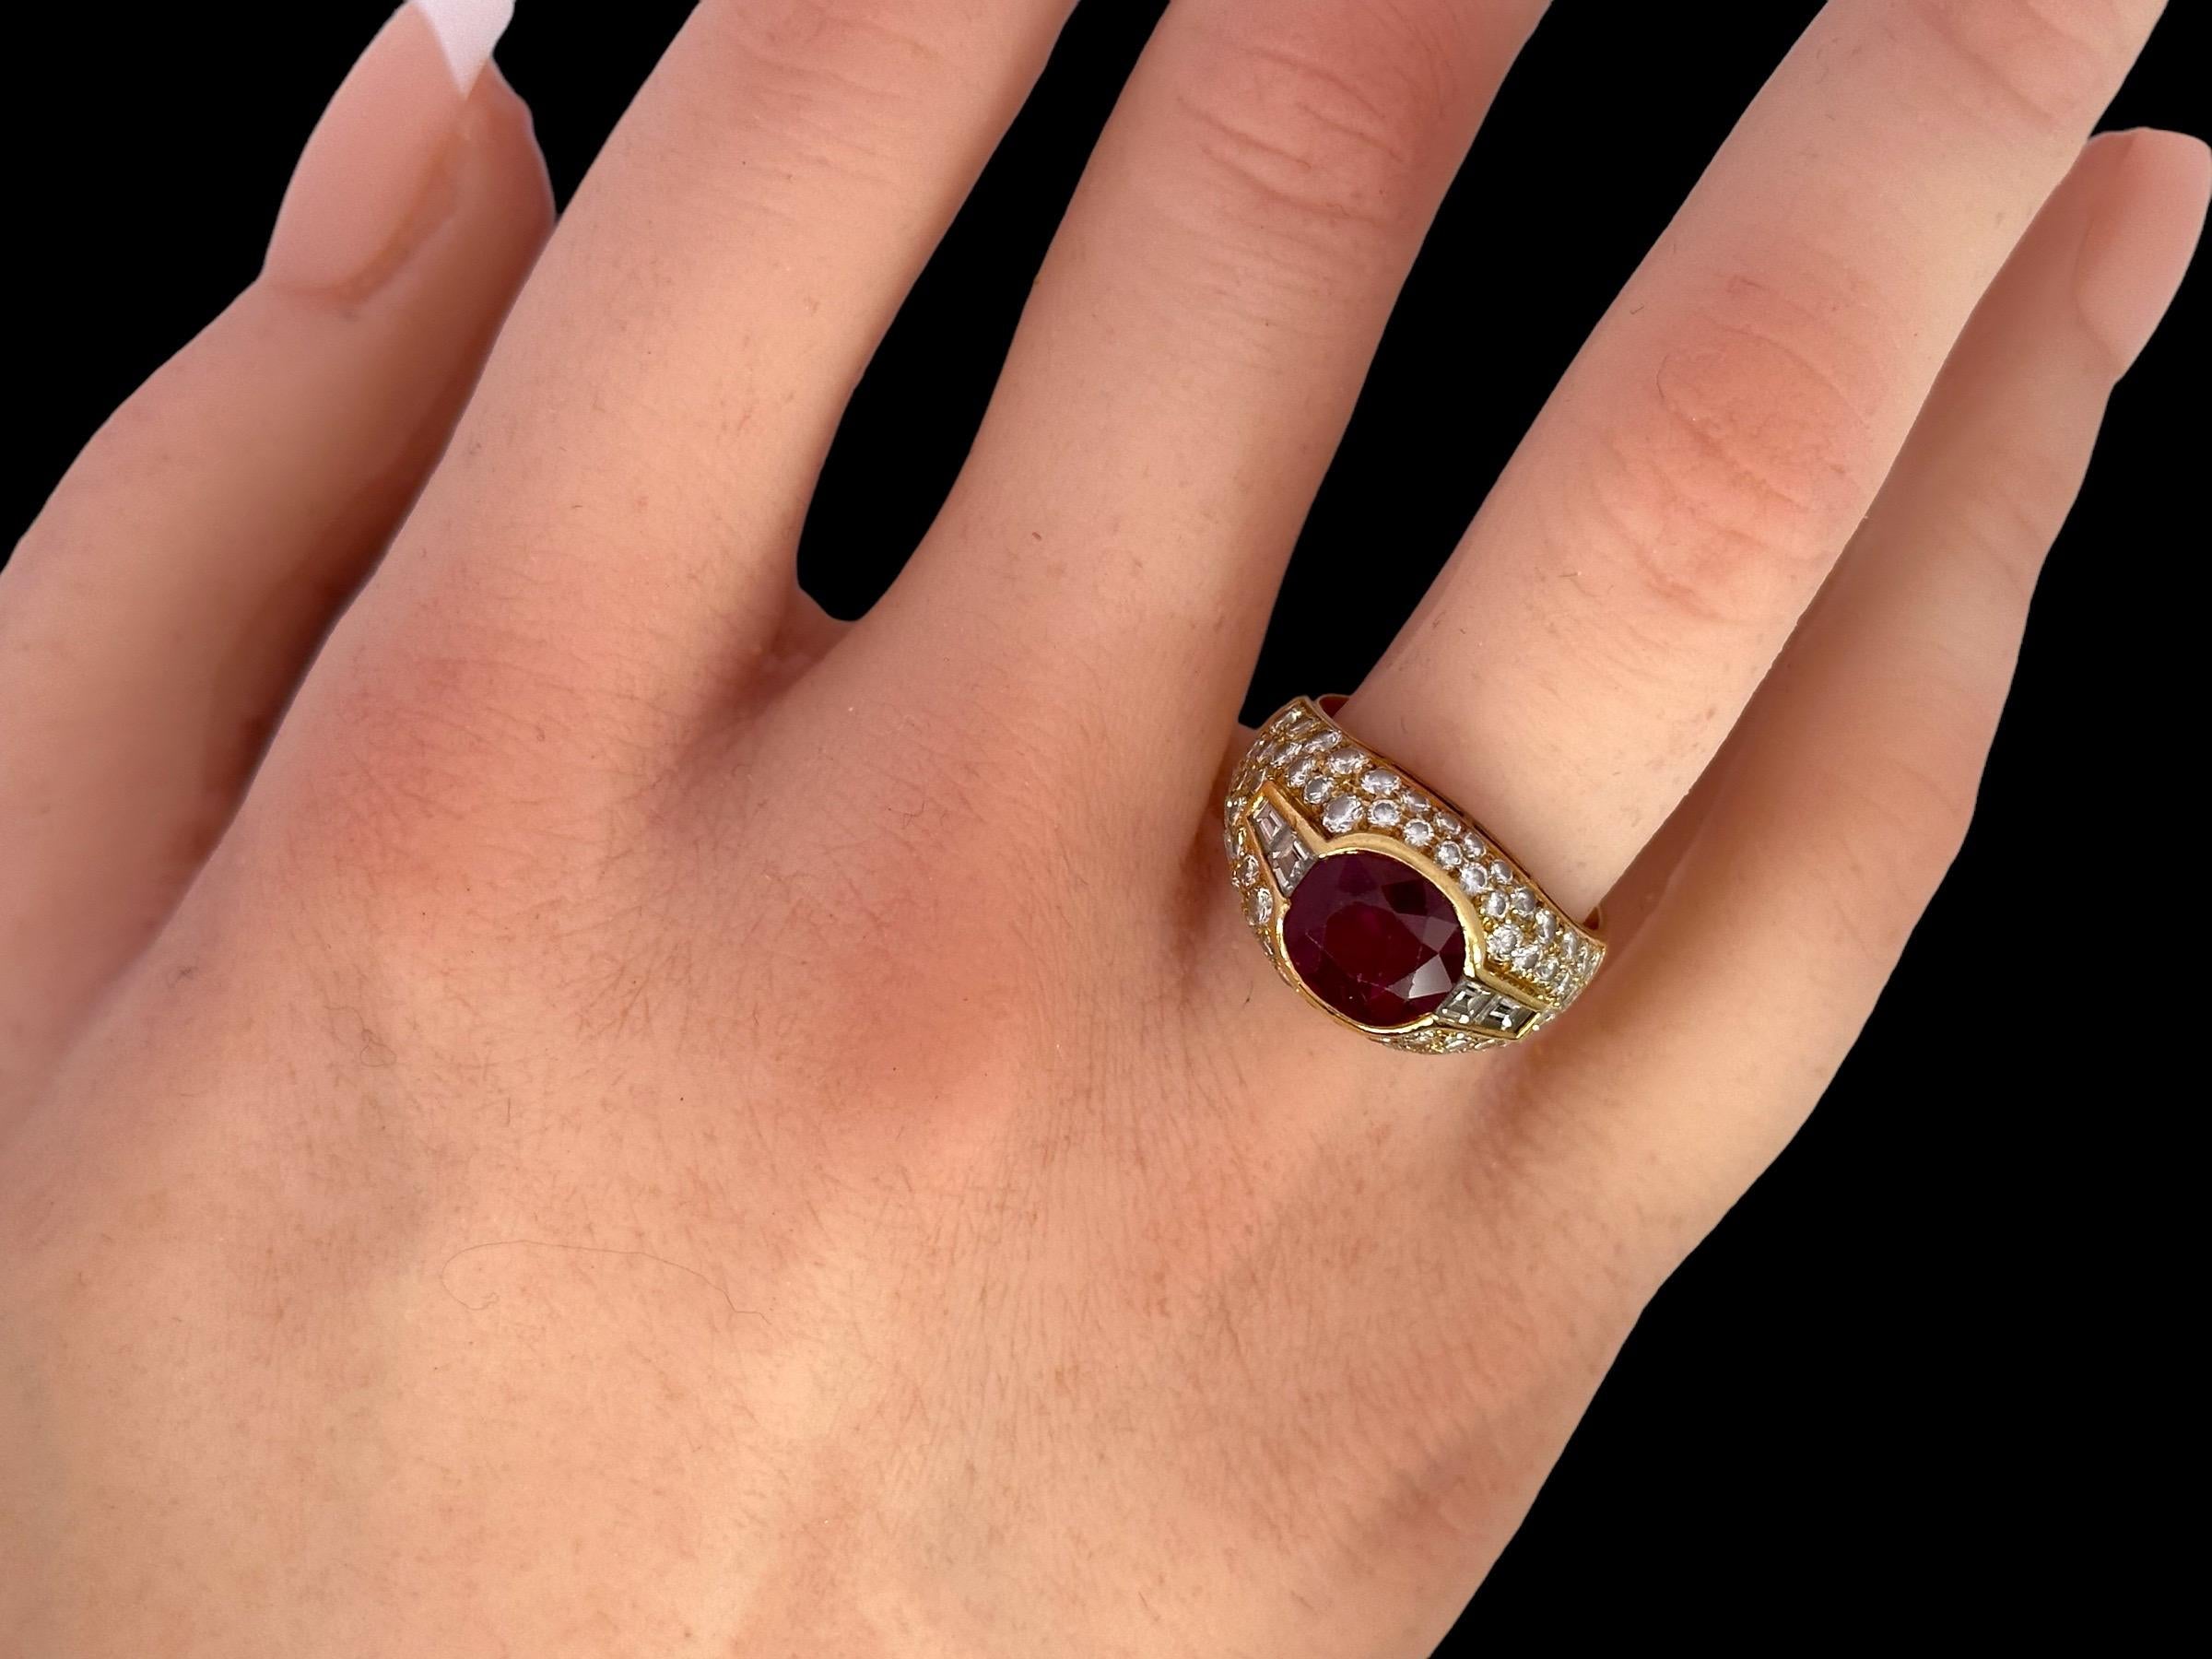 Bvlgari Trombino 18kt Yellow Gold Ring 2.09ct Ruby & Diamonds With GRS Cert For Sale 7